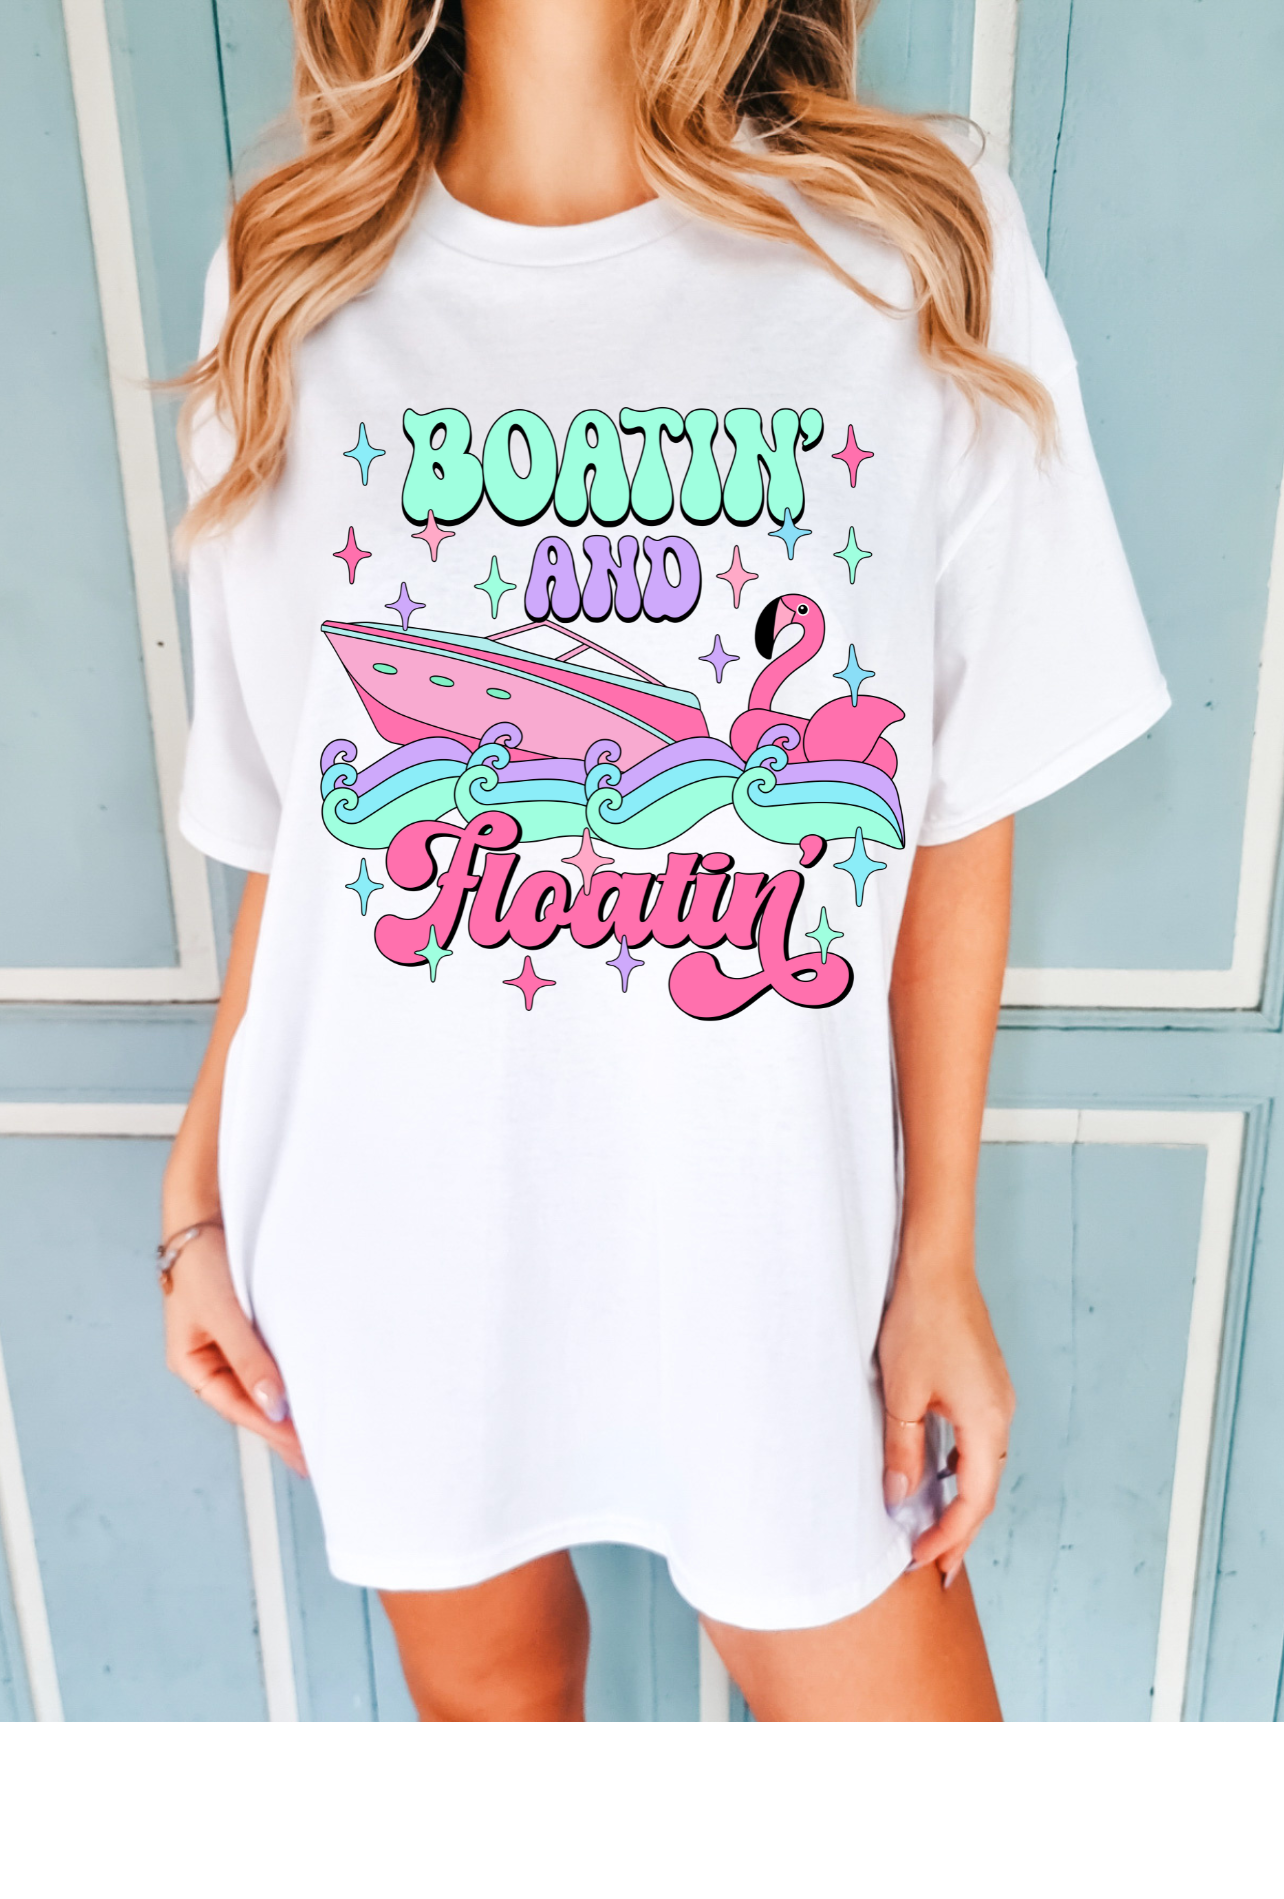 Boatin’ and Floatin’ T-Shirt